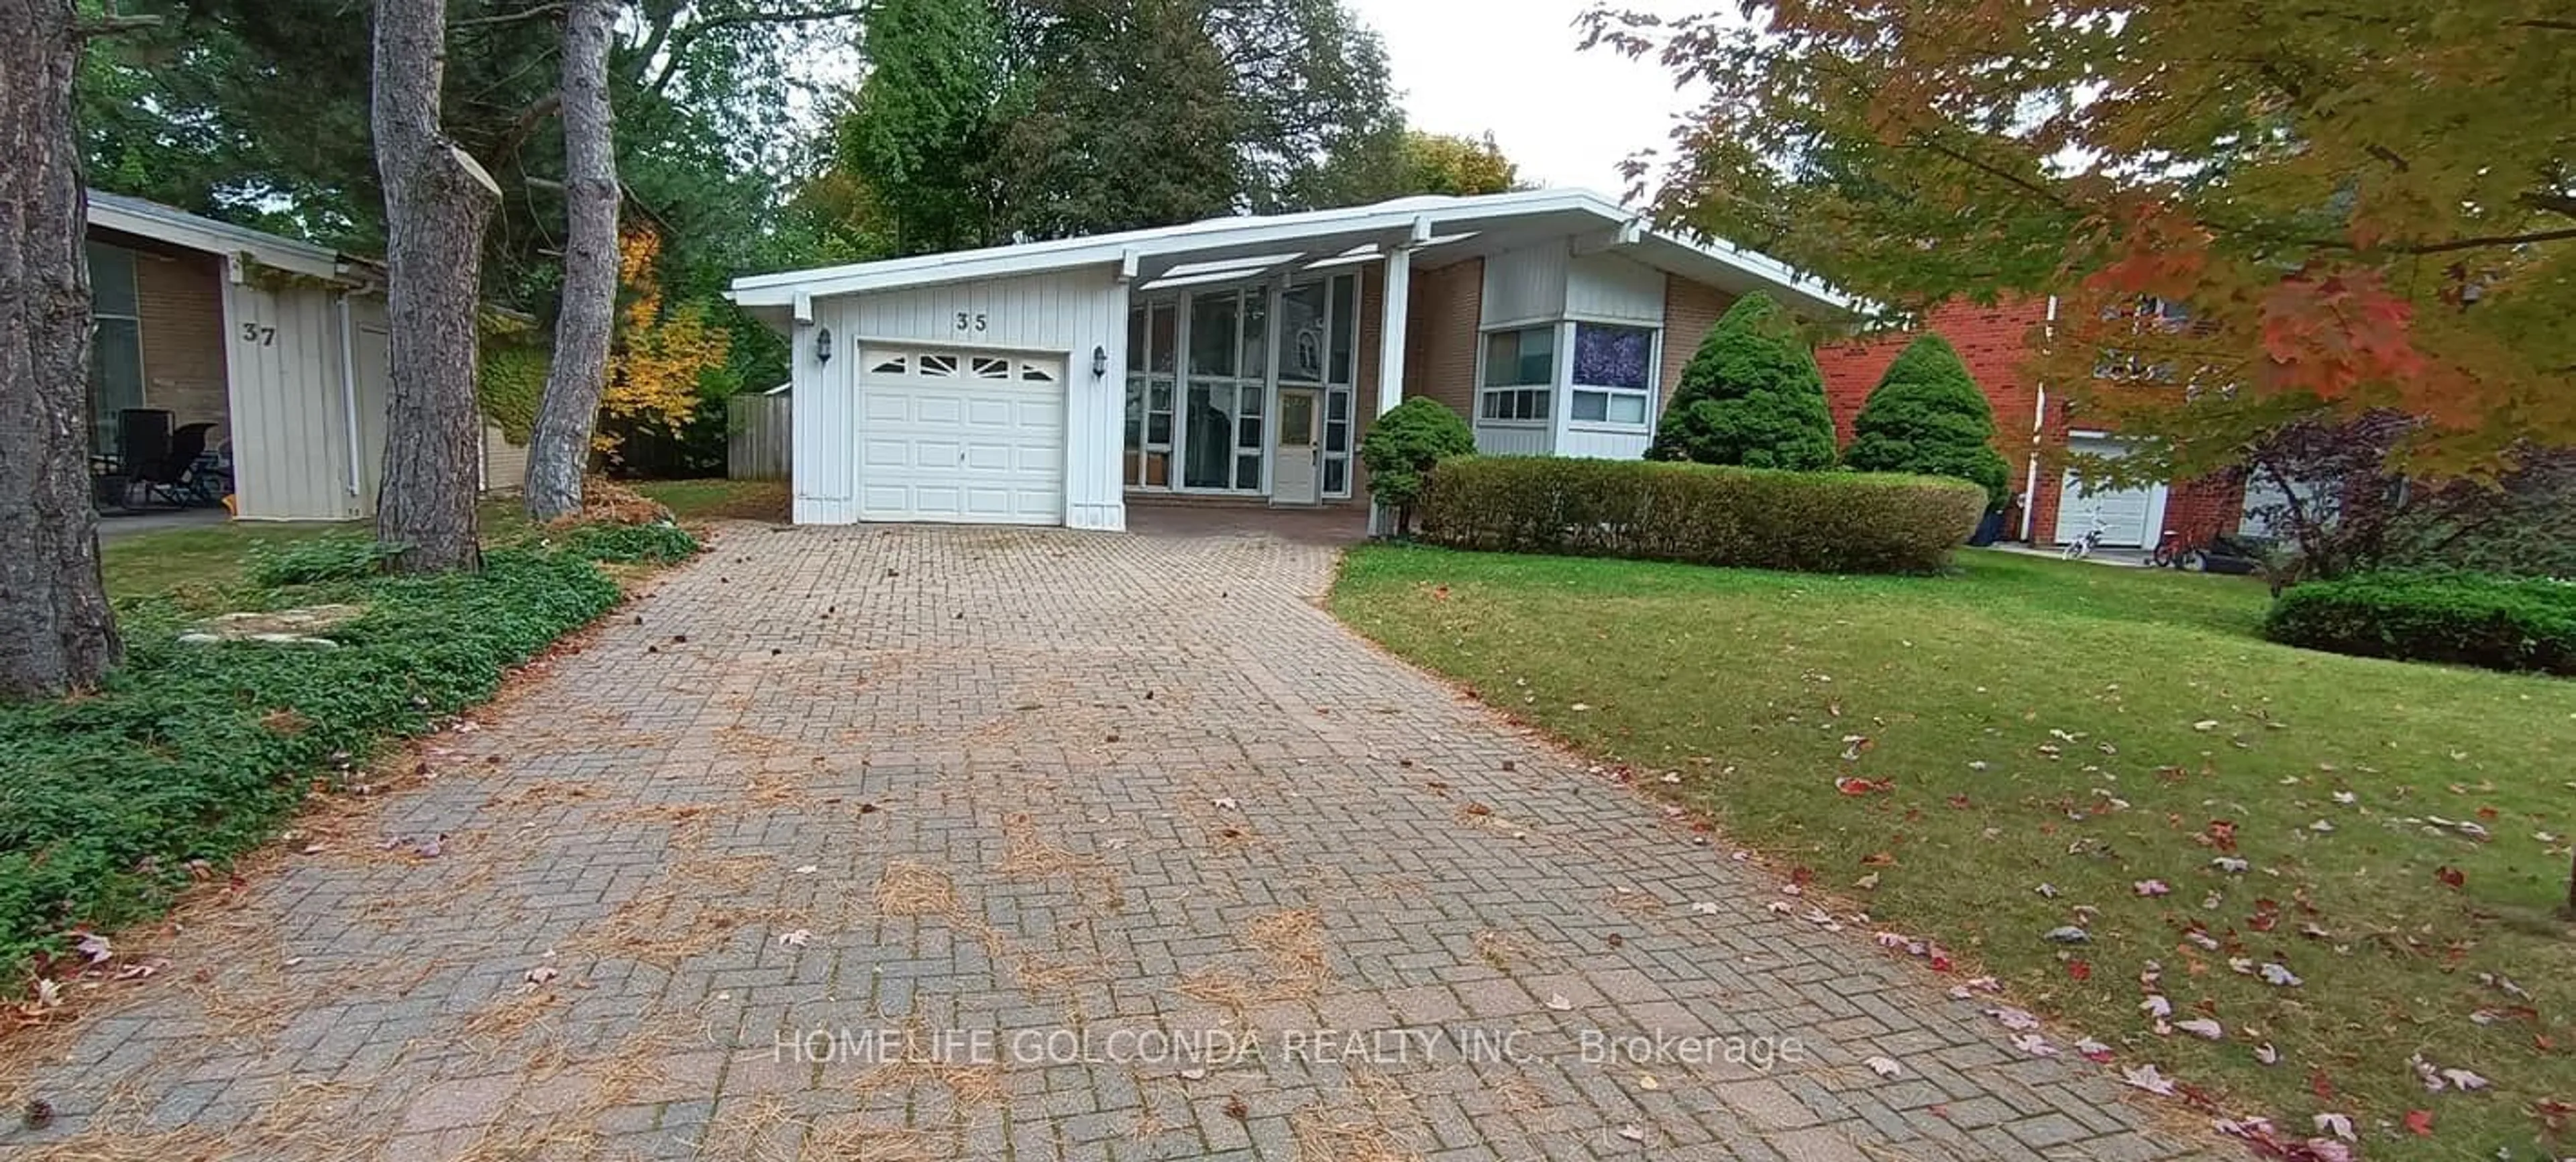 Home with vinyl exterior material for 35 Grangemill Cres, Toronto Ontario M3B 2J3